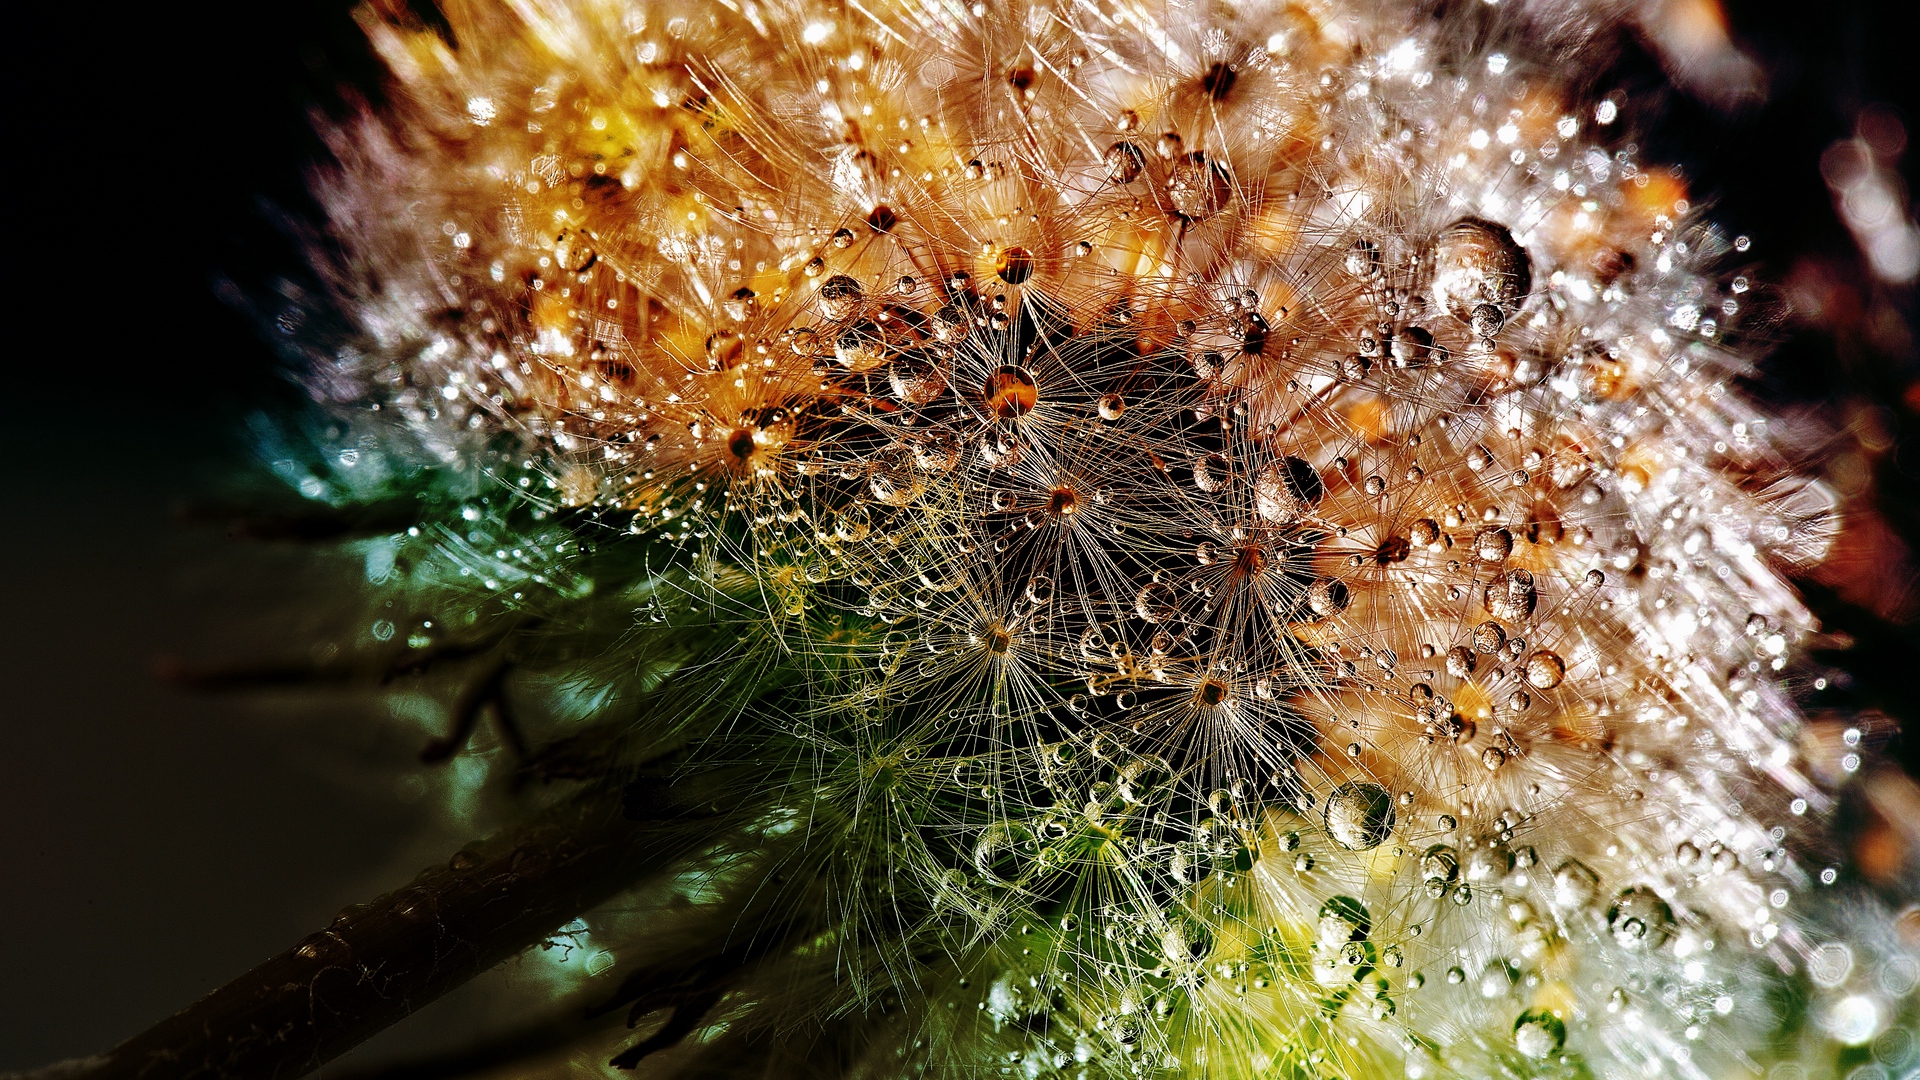 Beautiful Dandelion With Dew Drops - Macro Photography Of Dandelions - HD Wallpaper 